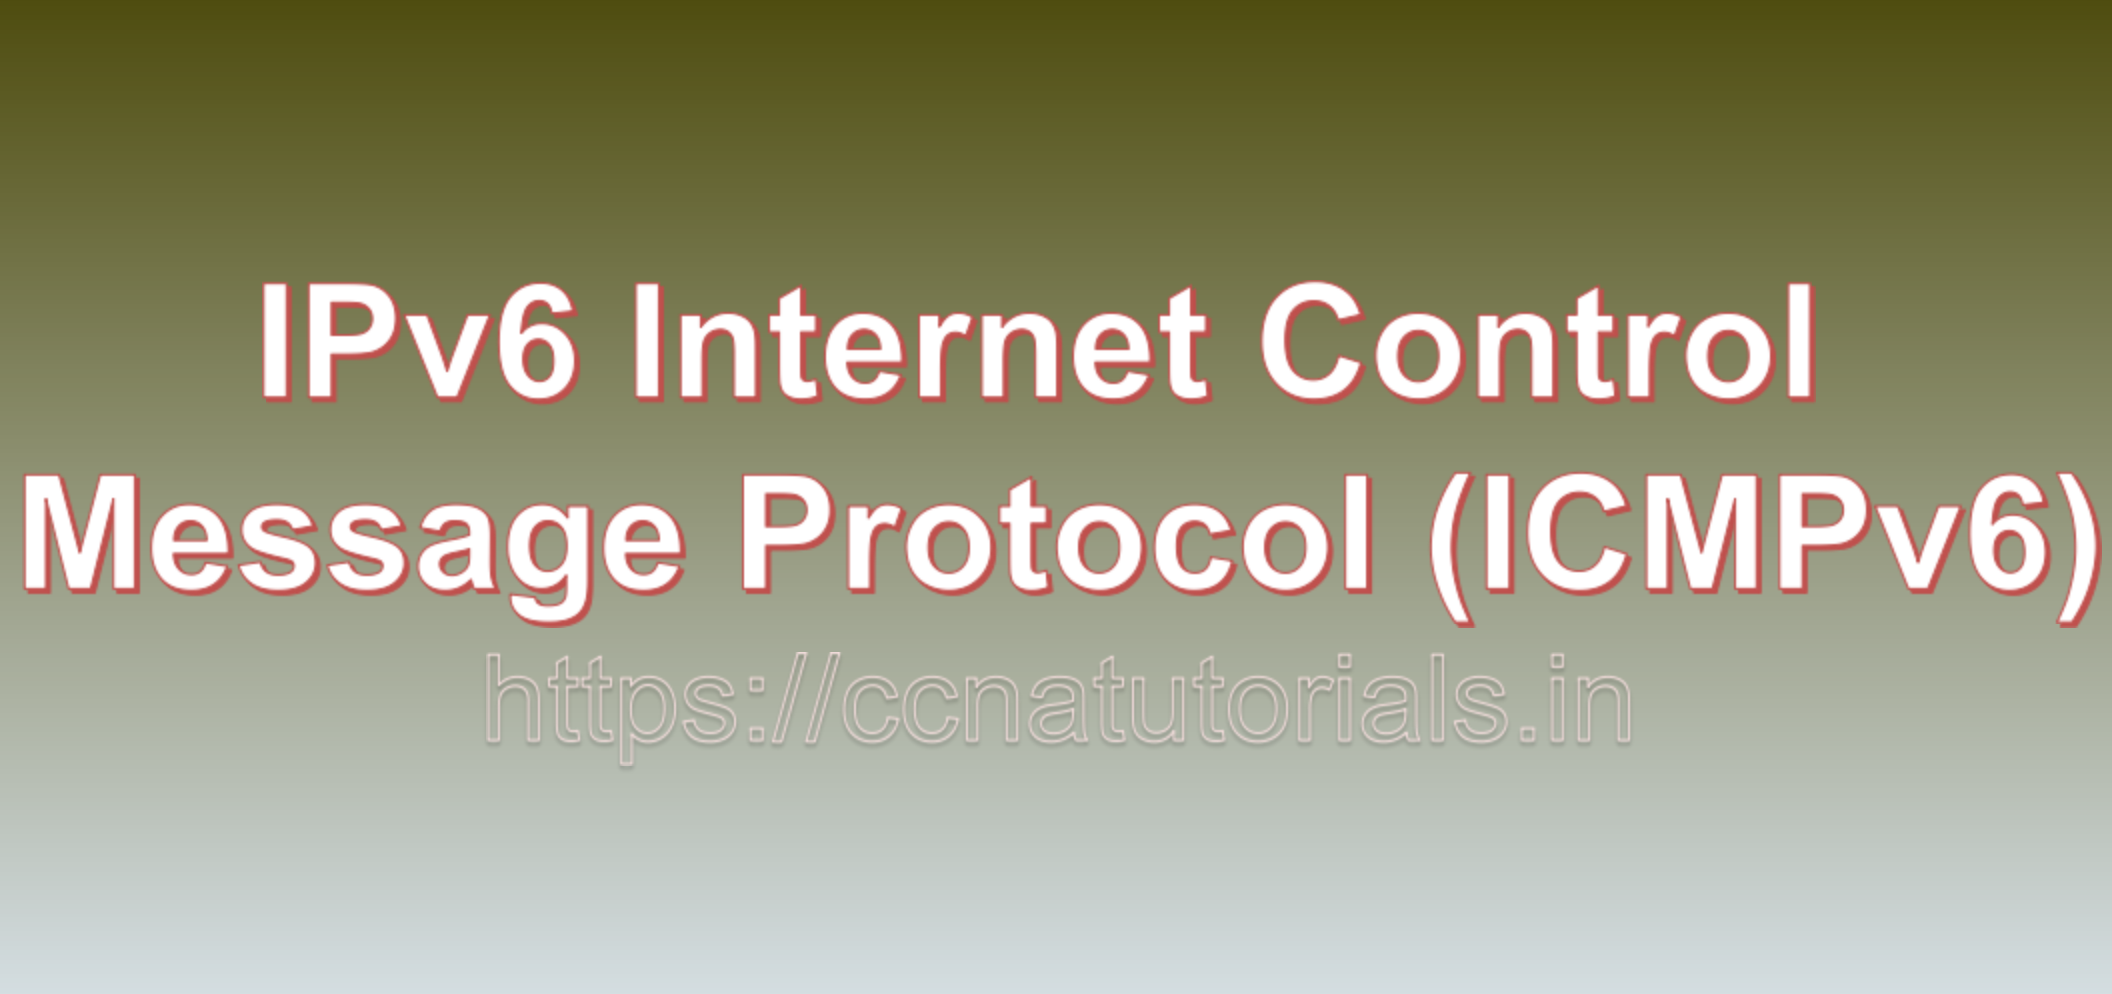 IPv6 Internet Control Message Protocol (ICMPv6), ccna, ccna tutorials